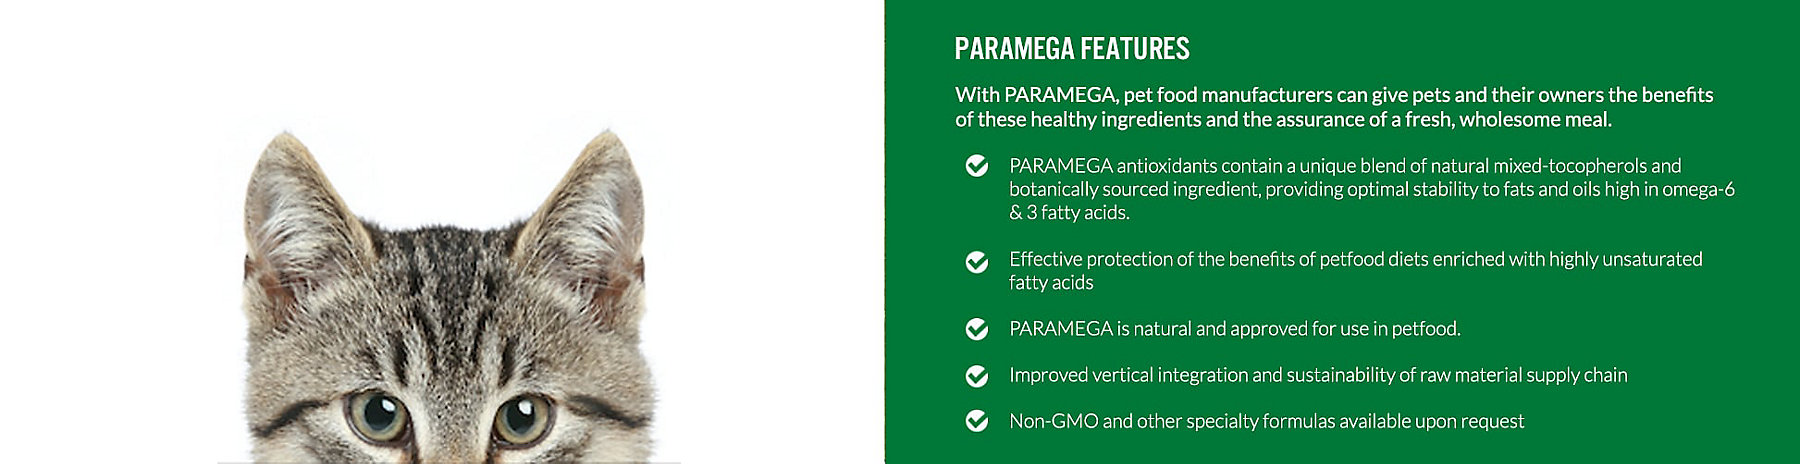 paramega-benefits_1